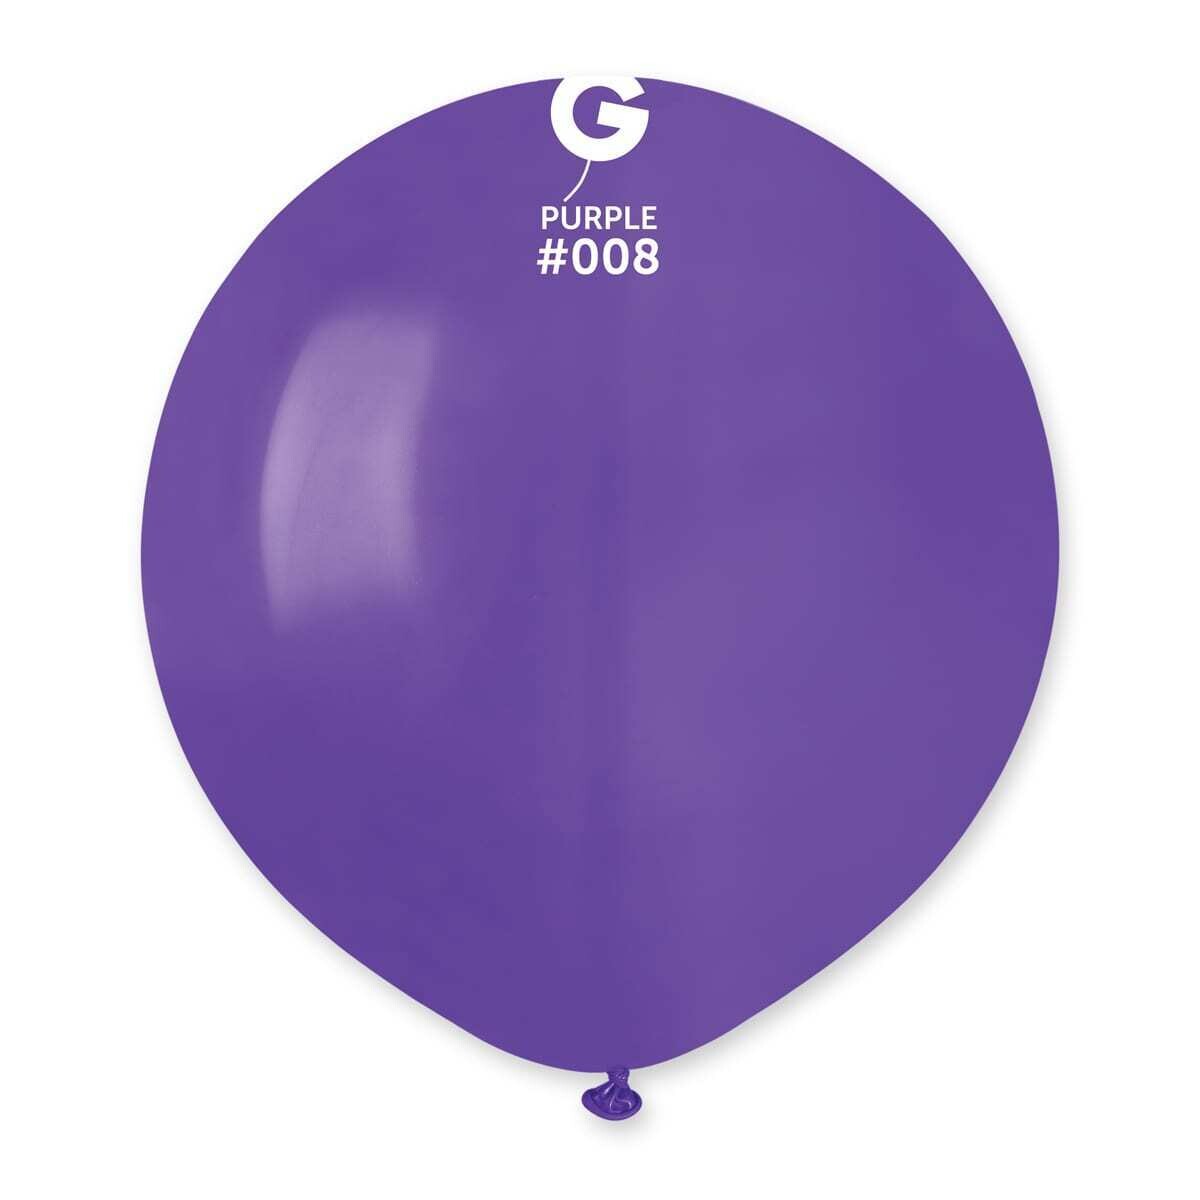 G150: #008 Purple 150858 Standard Color 19 in